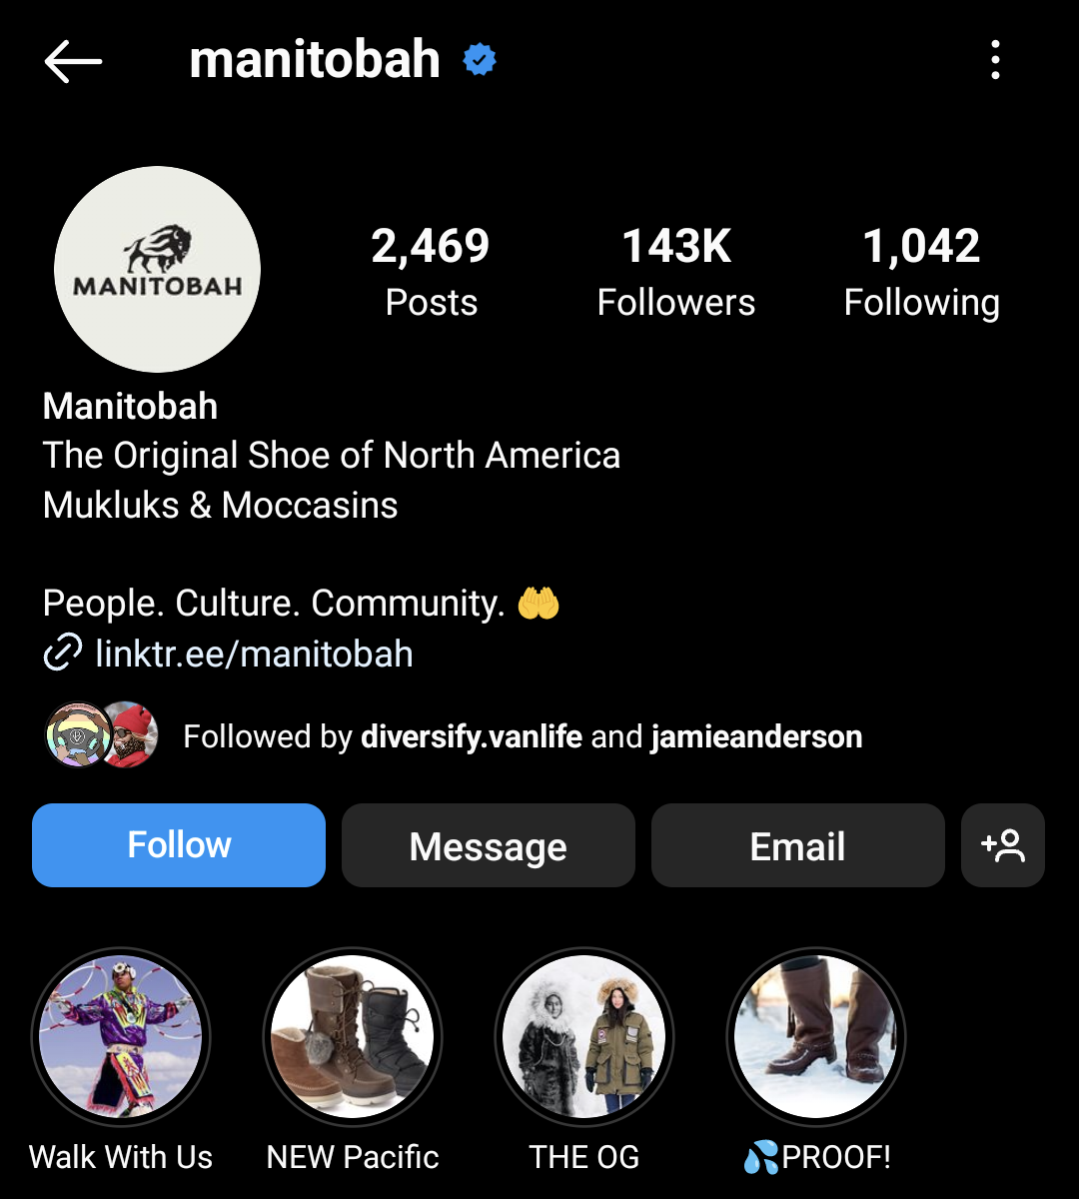 shoe brand Manitobah Mukluks Instagram bio showing a clean, on brand look